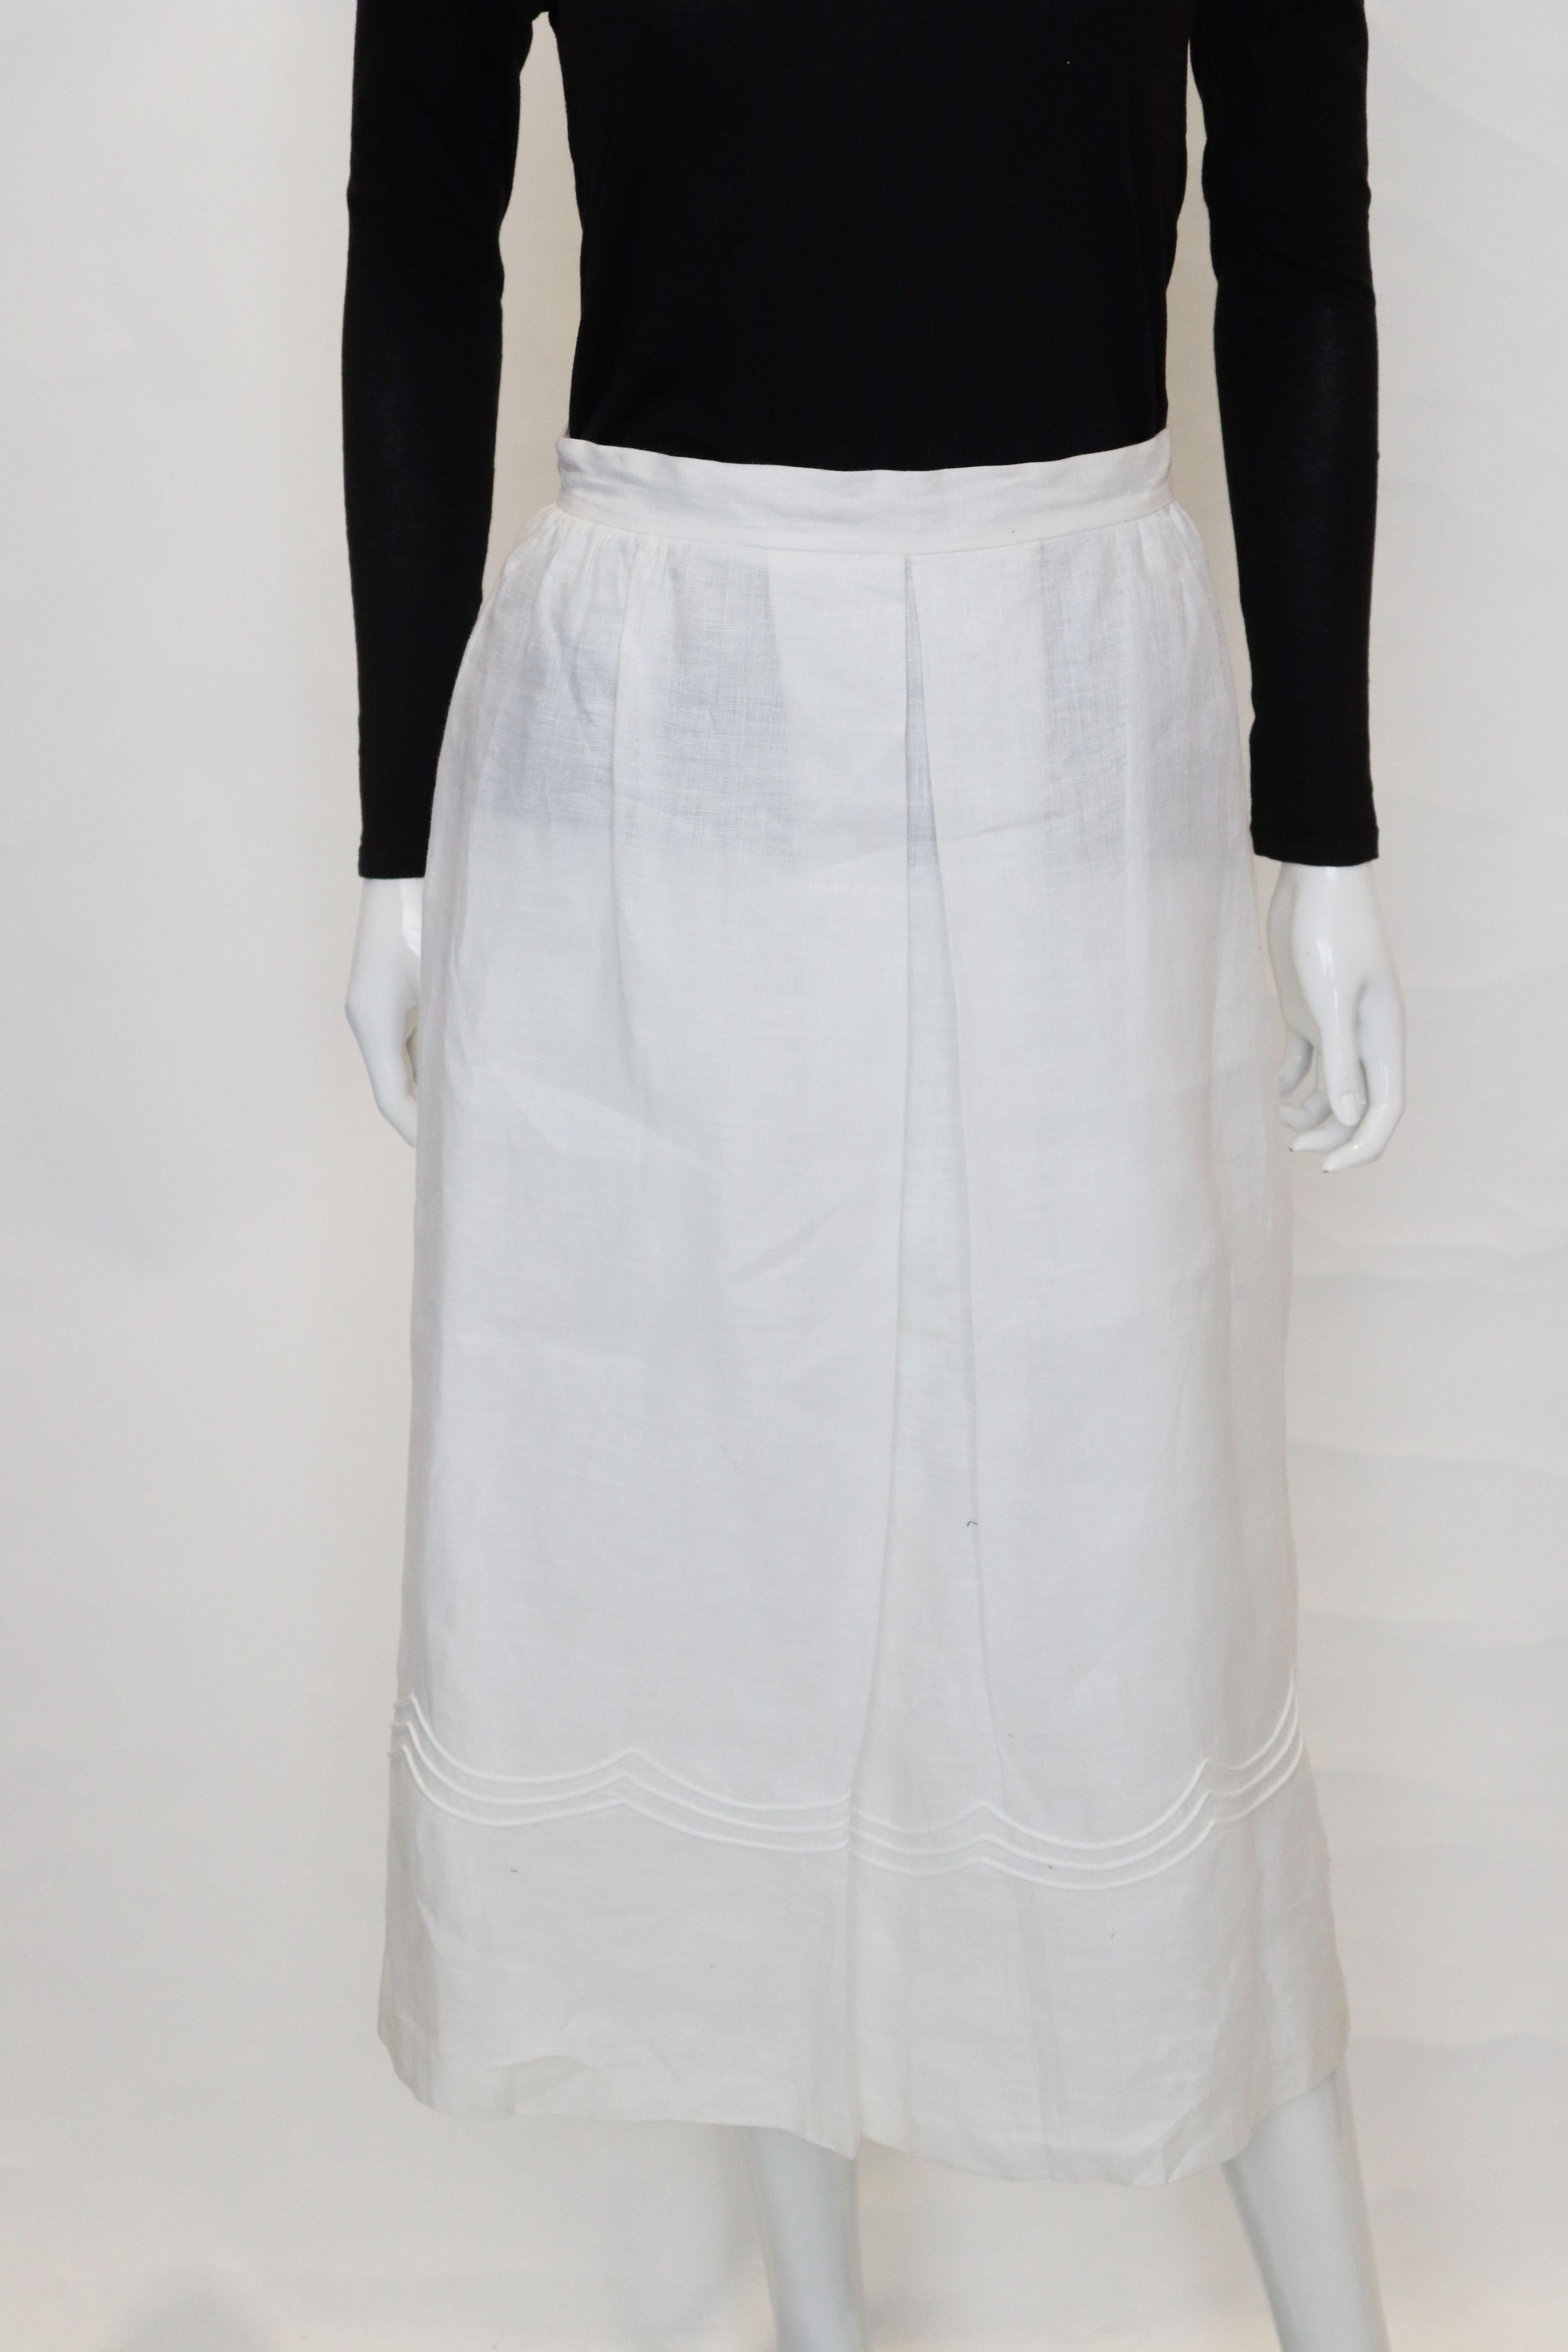 Vintge White Linen Skirt by Della Porta In Good Condition For Sale In London, GB